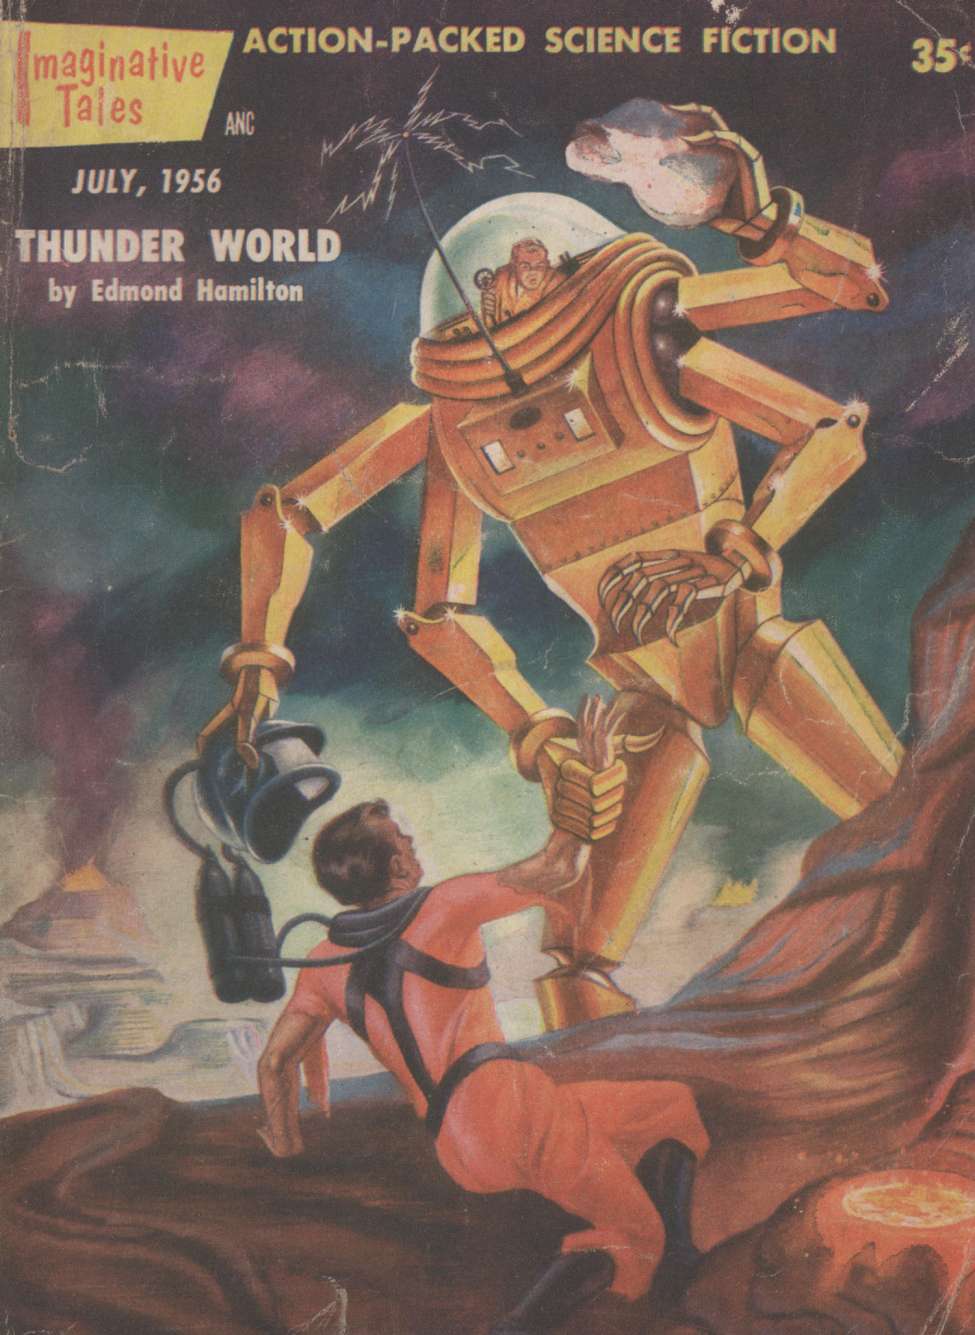 Book Cover For Imaginative Tales v3 4 - Thunder World - Edmond Hamilton